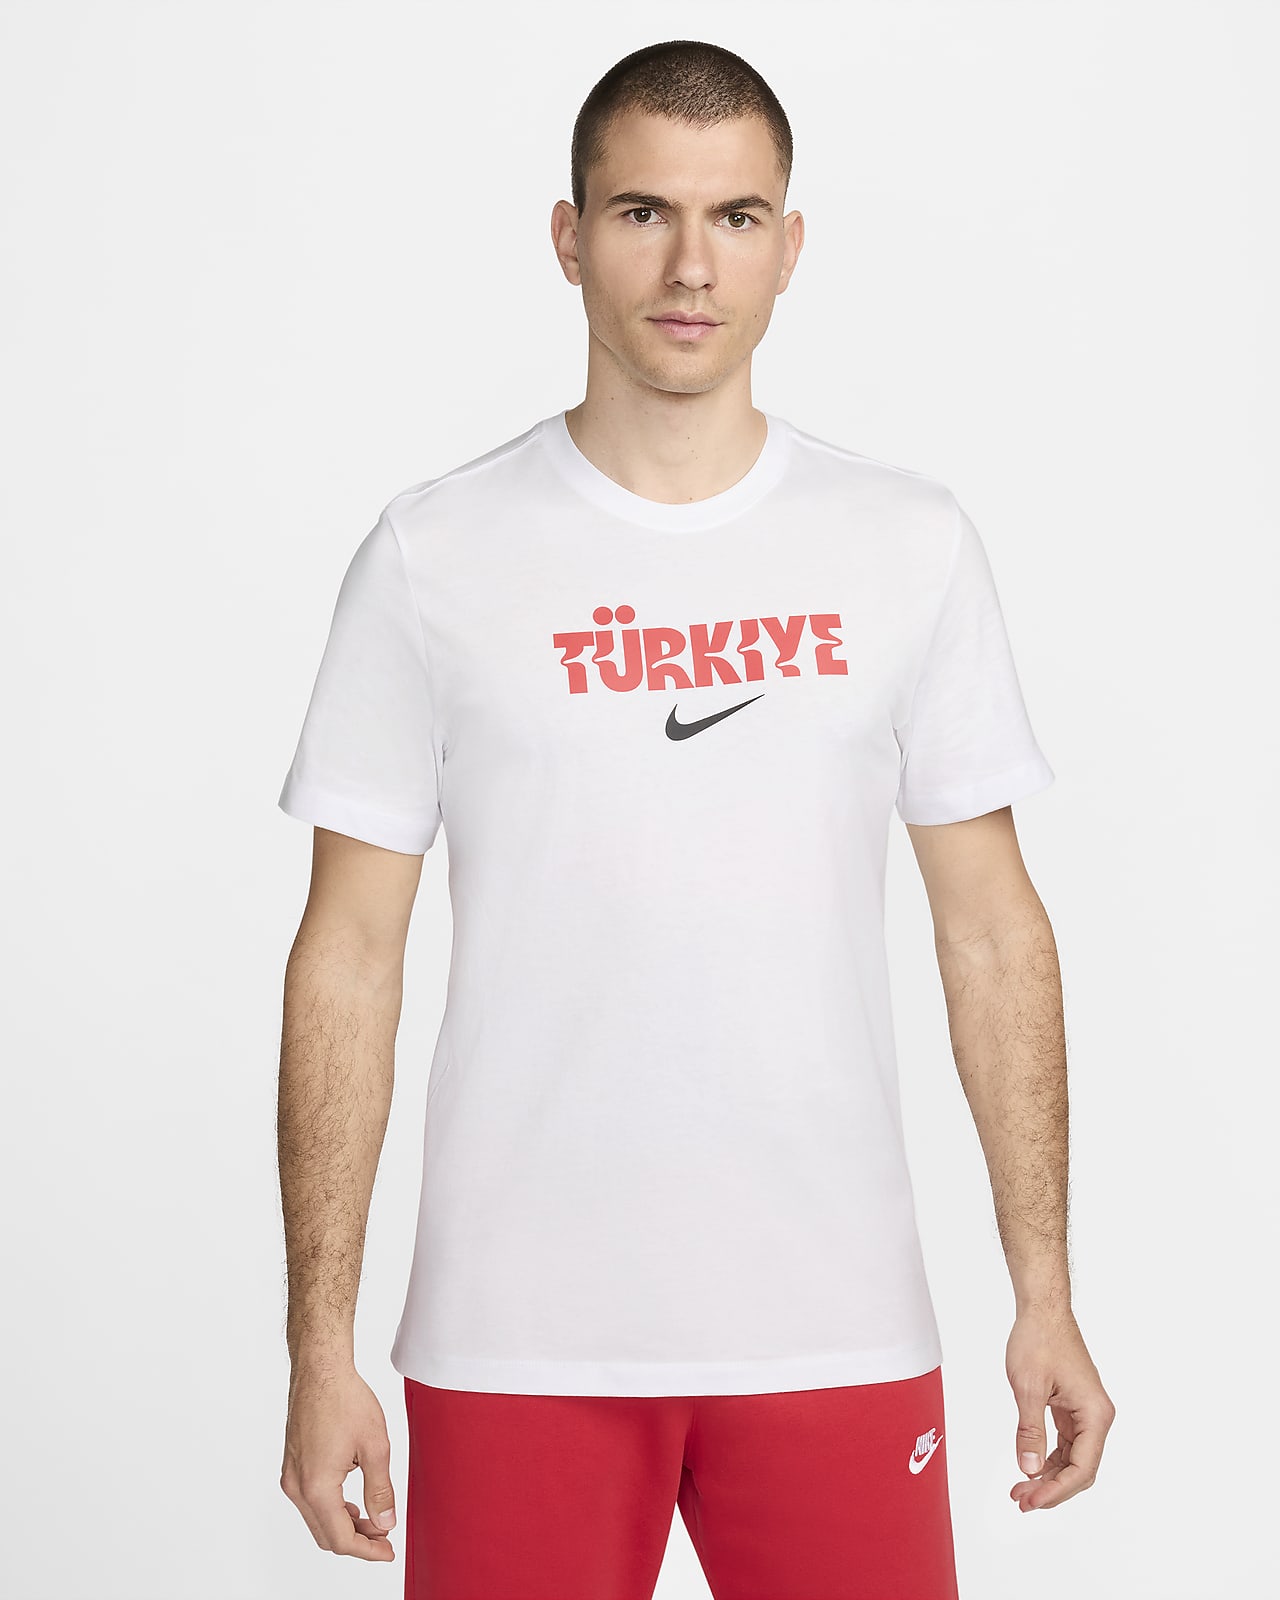 Türkiye Crest Men's Nike Football T-Shirt